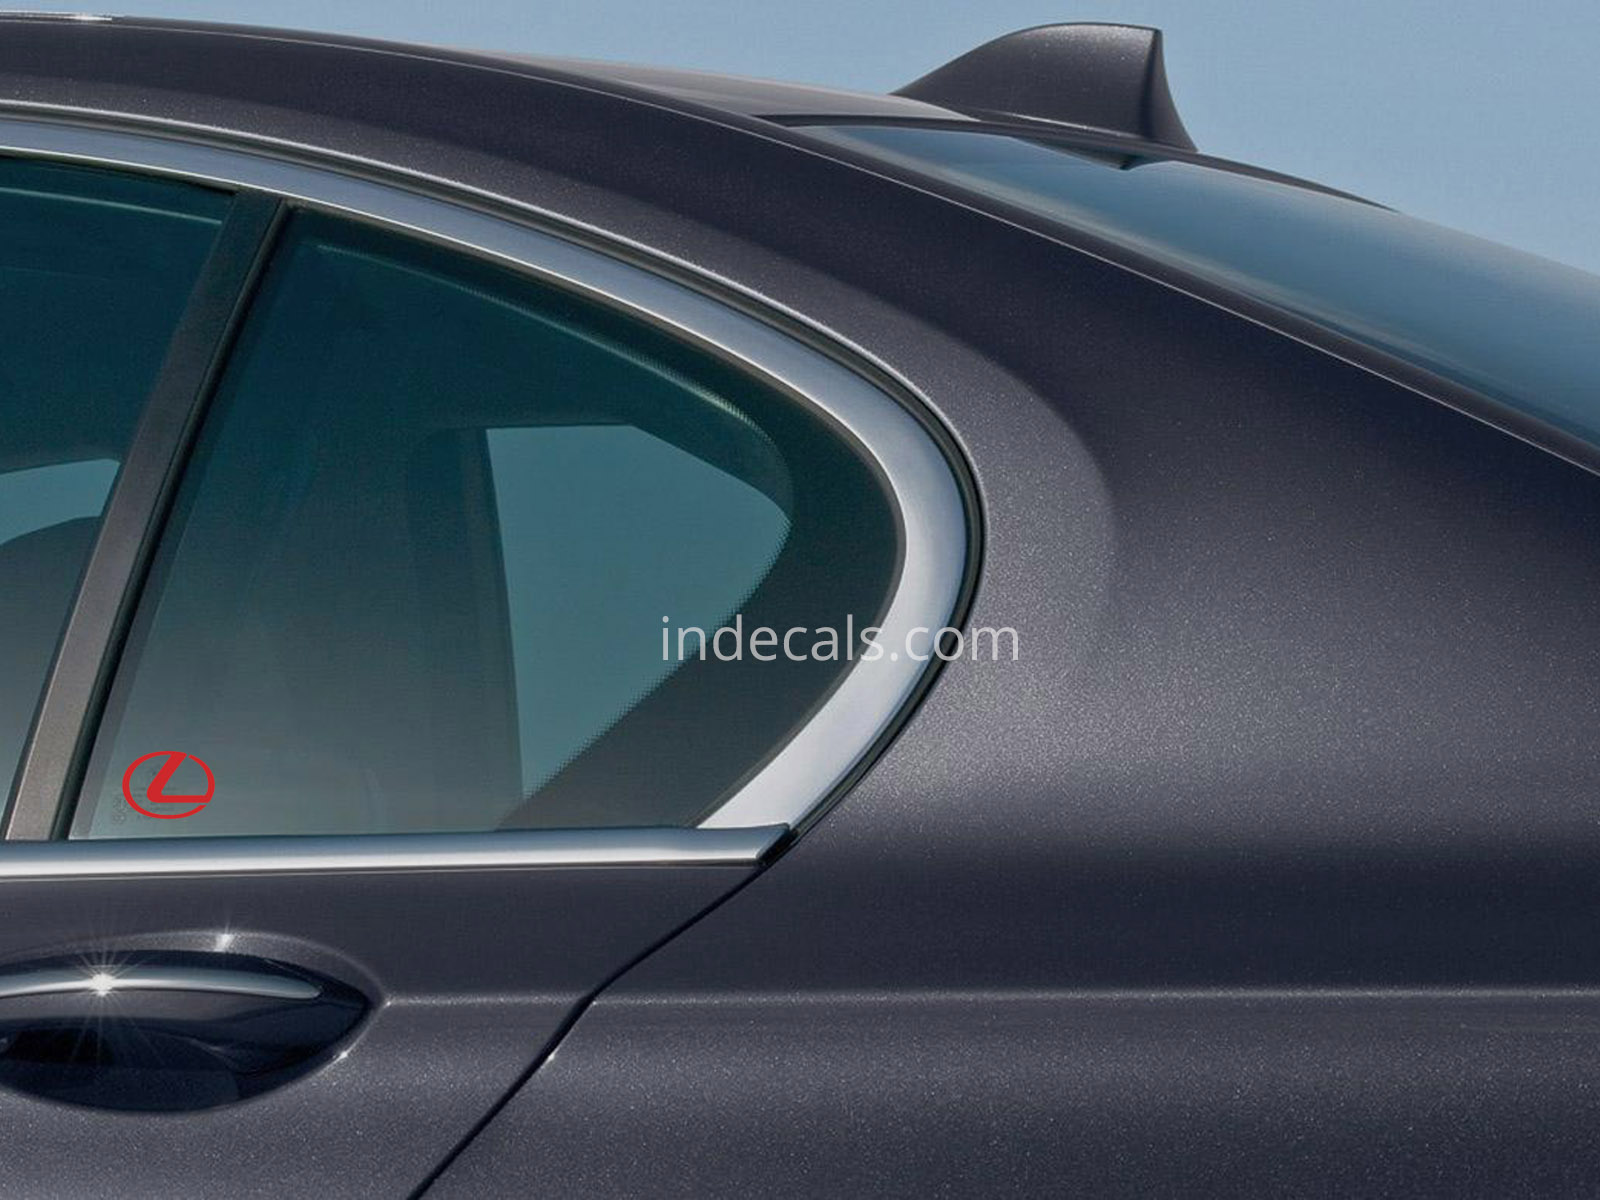 3 x Lexus Stickers for Rear Window - Red